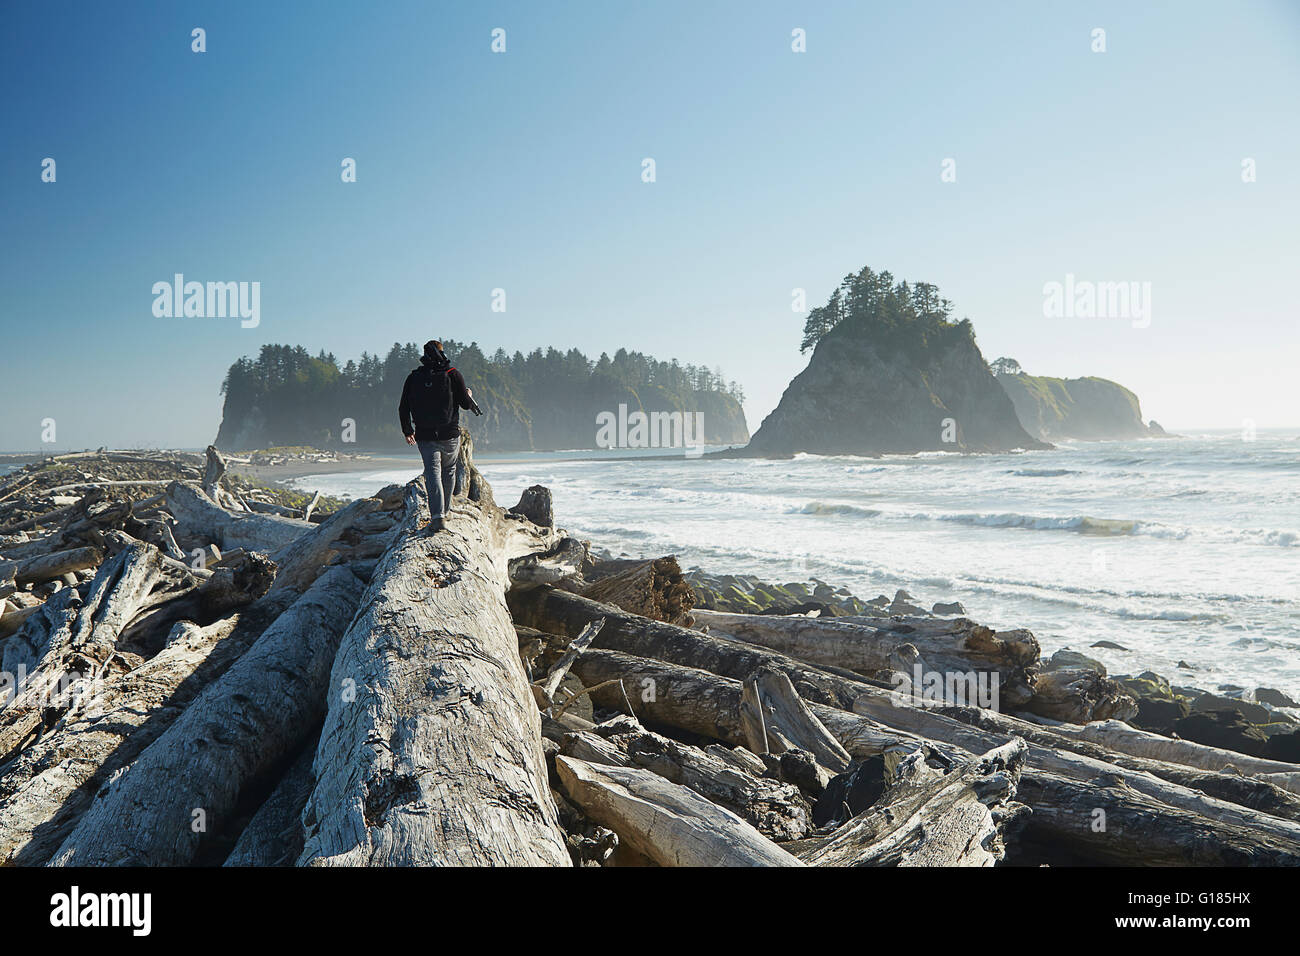 Rear view of man walking on fallen tree carrying tripod, Rialto Beach, Washington State, USA Stock Photo